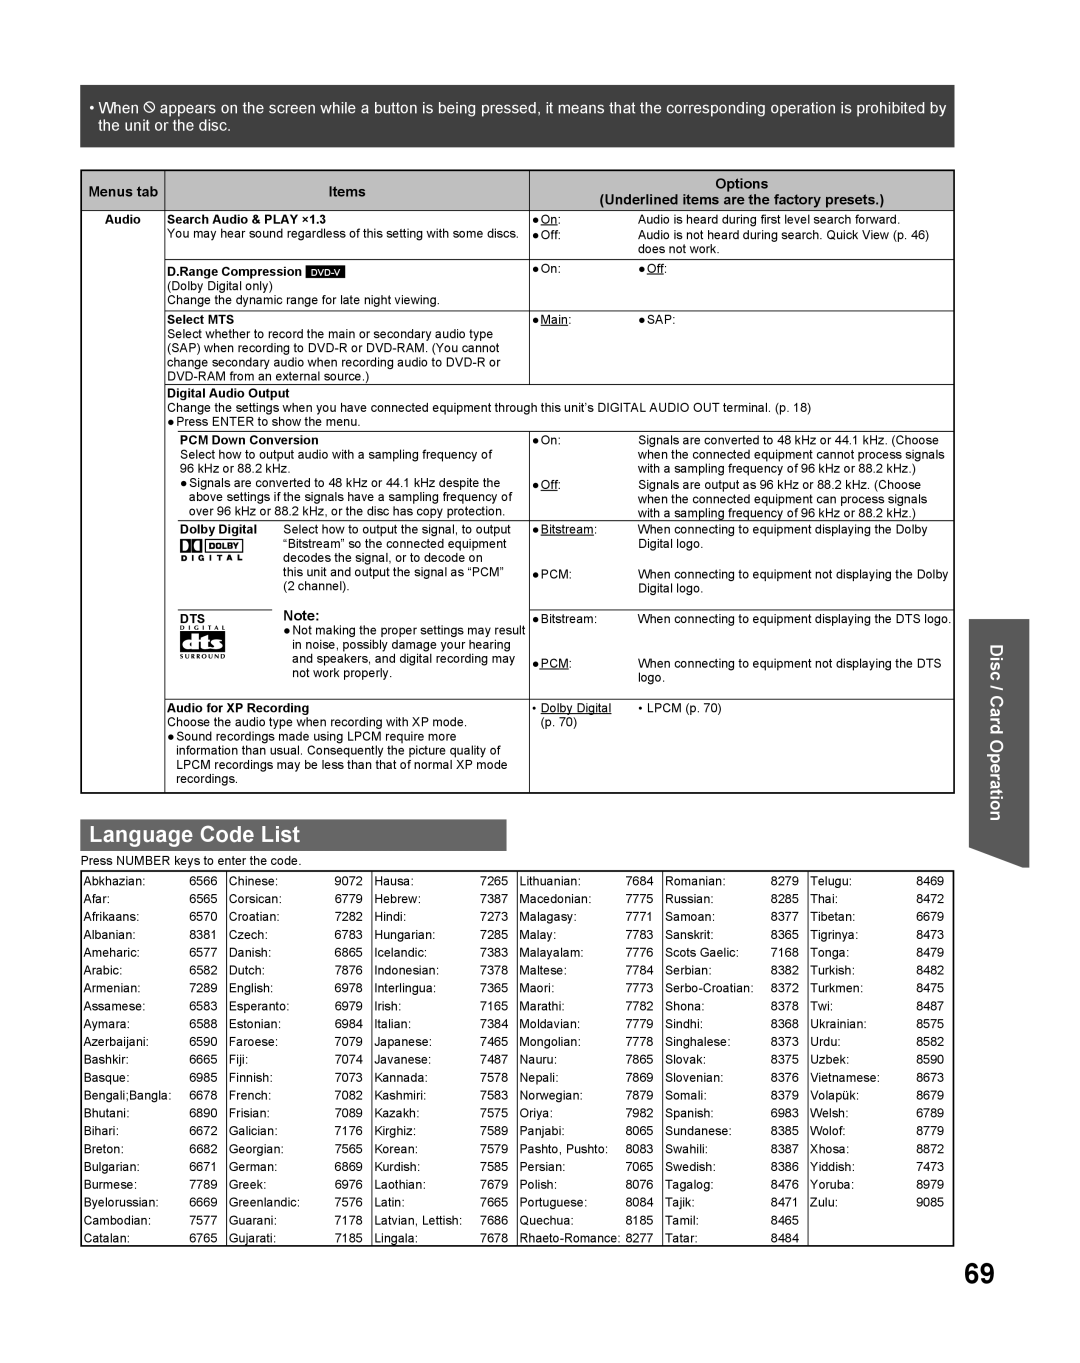 Panasonic TC 22LR30 manual Language Code List, Disc / Card Operation, Menus tab, Items, Options 